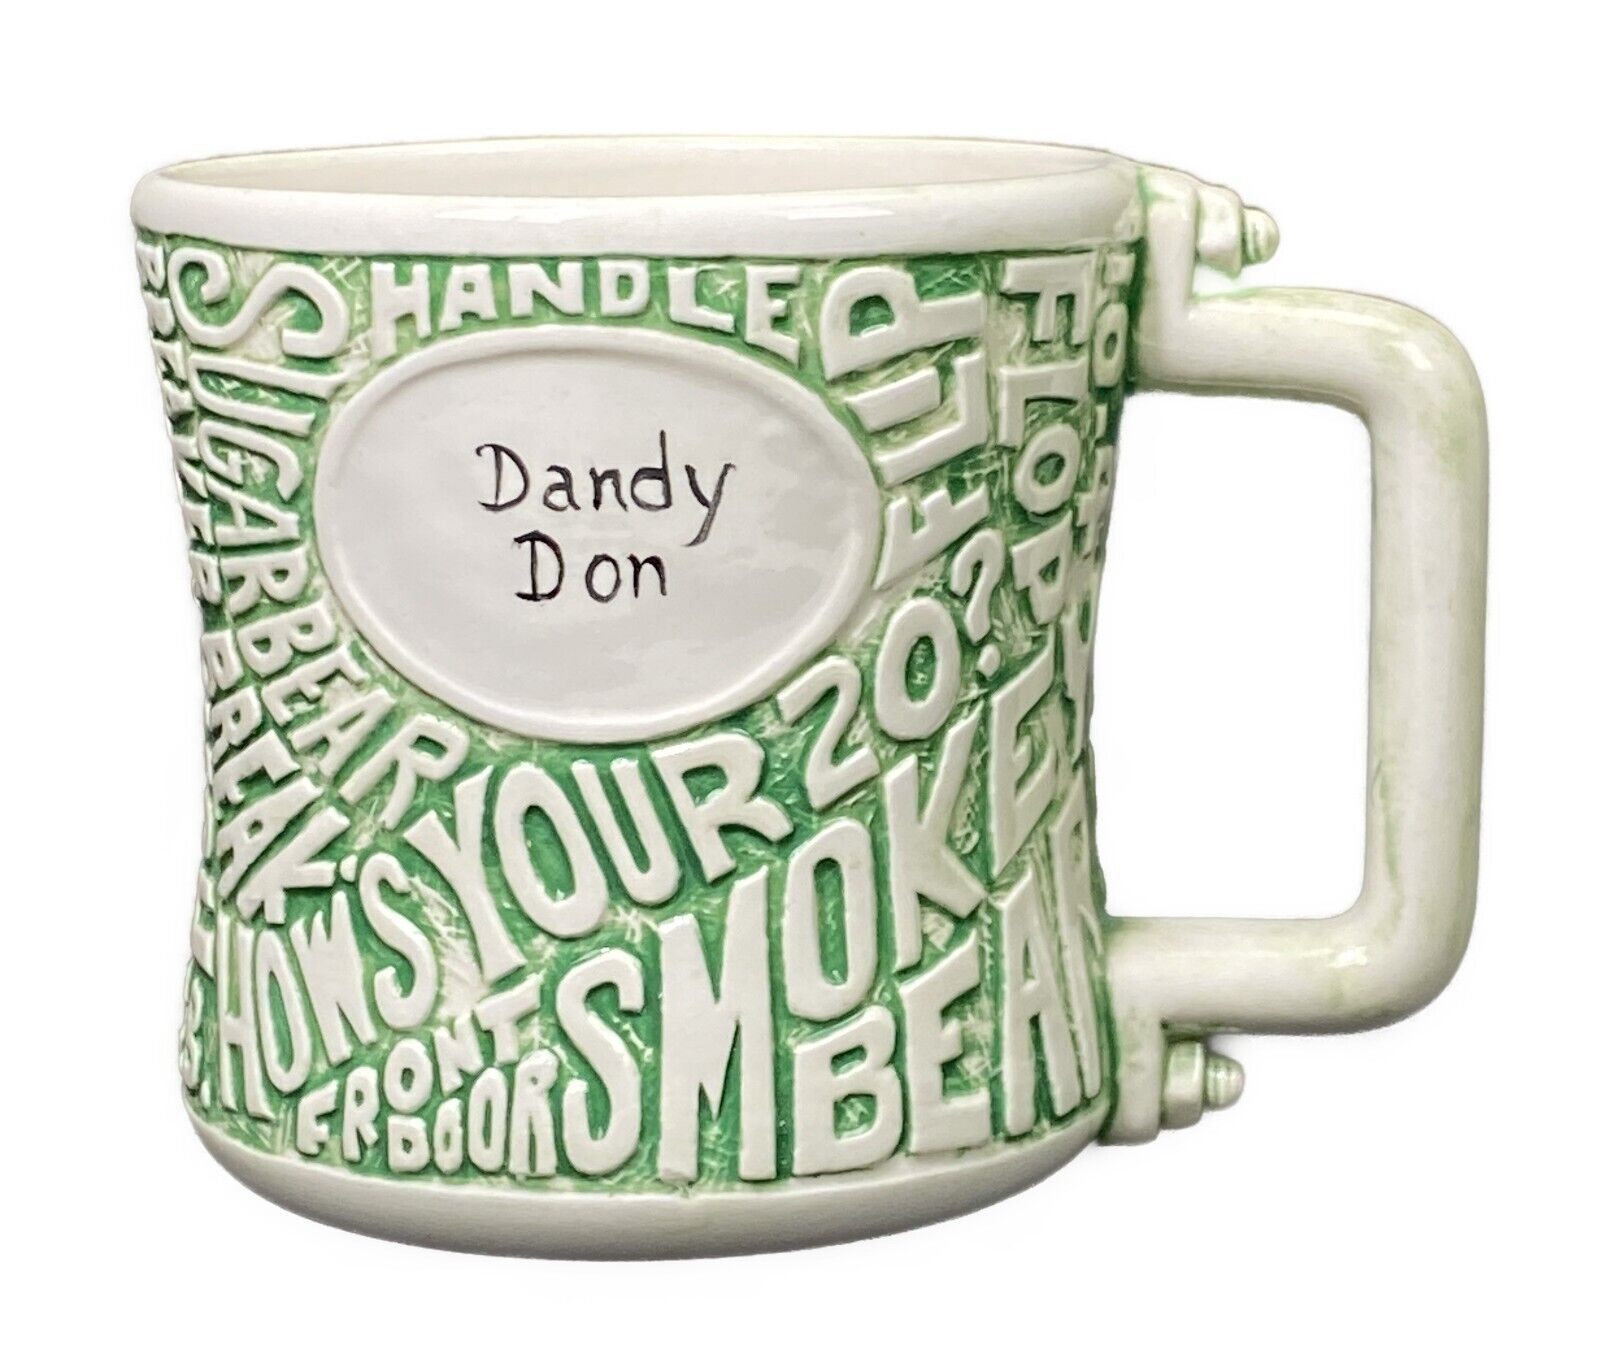 Dandy Don Trucker Cup CB Radio Slang Handles Ceramic Mug by Toni